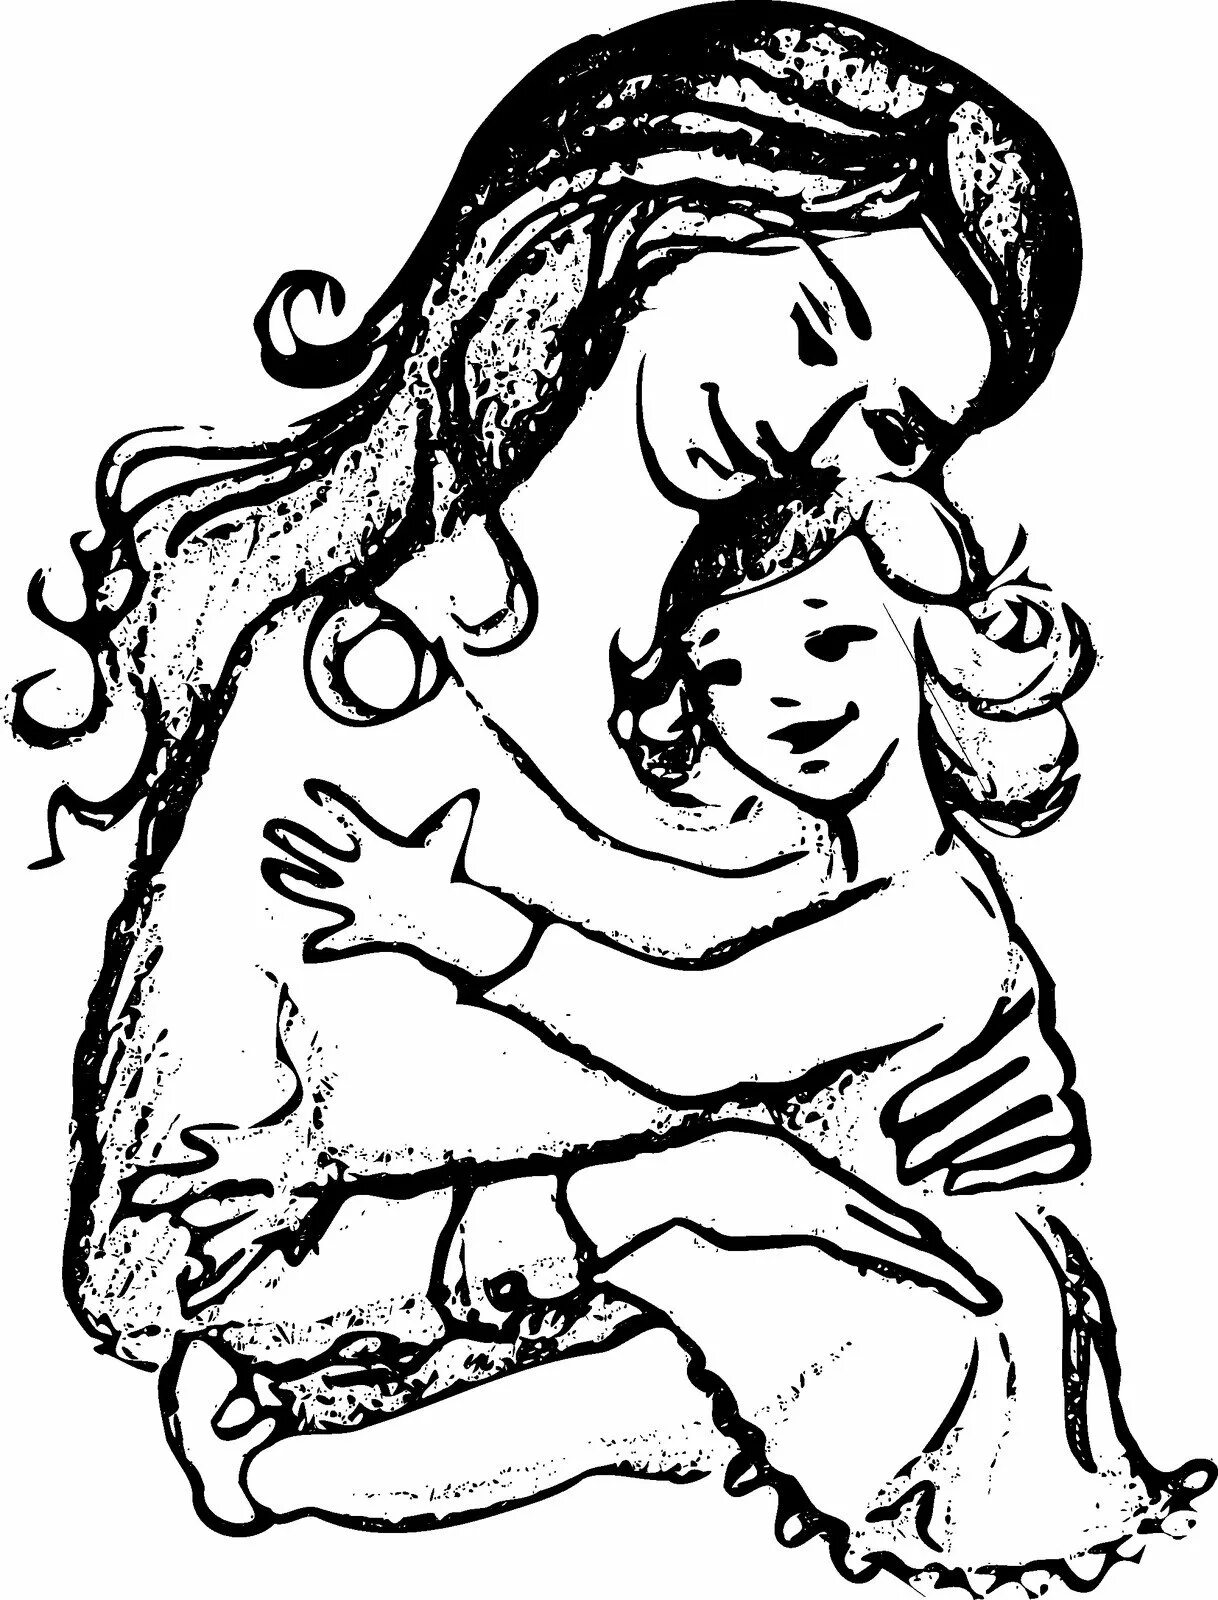 Мамина черен. Рисунок матери. Рисунок ко Дню матери. Раскраска ко Дню матери. Мама с ребенком рисунок.